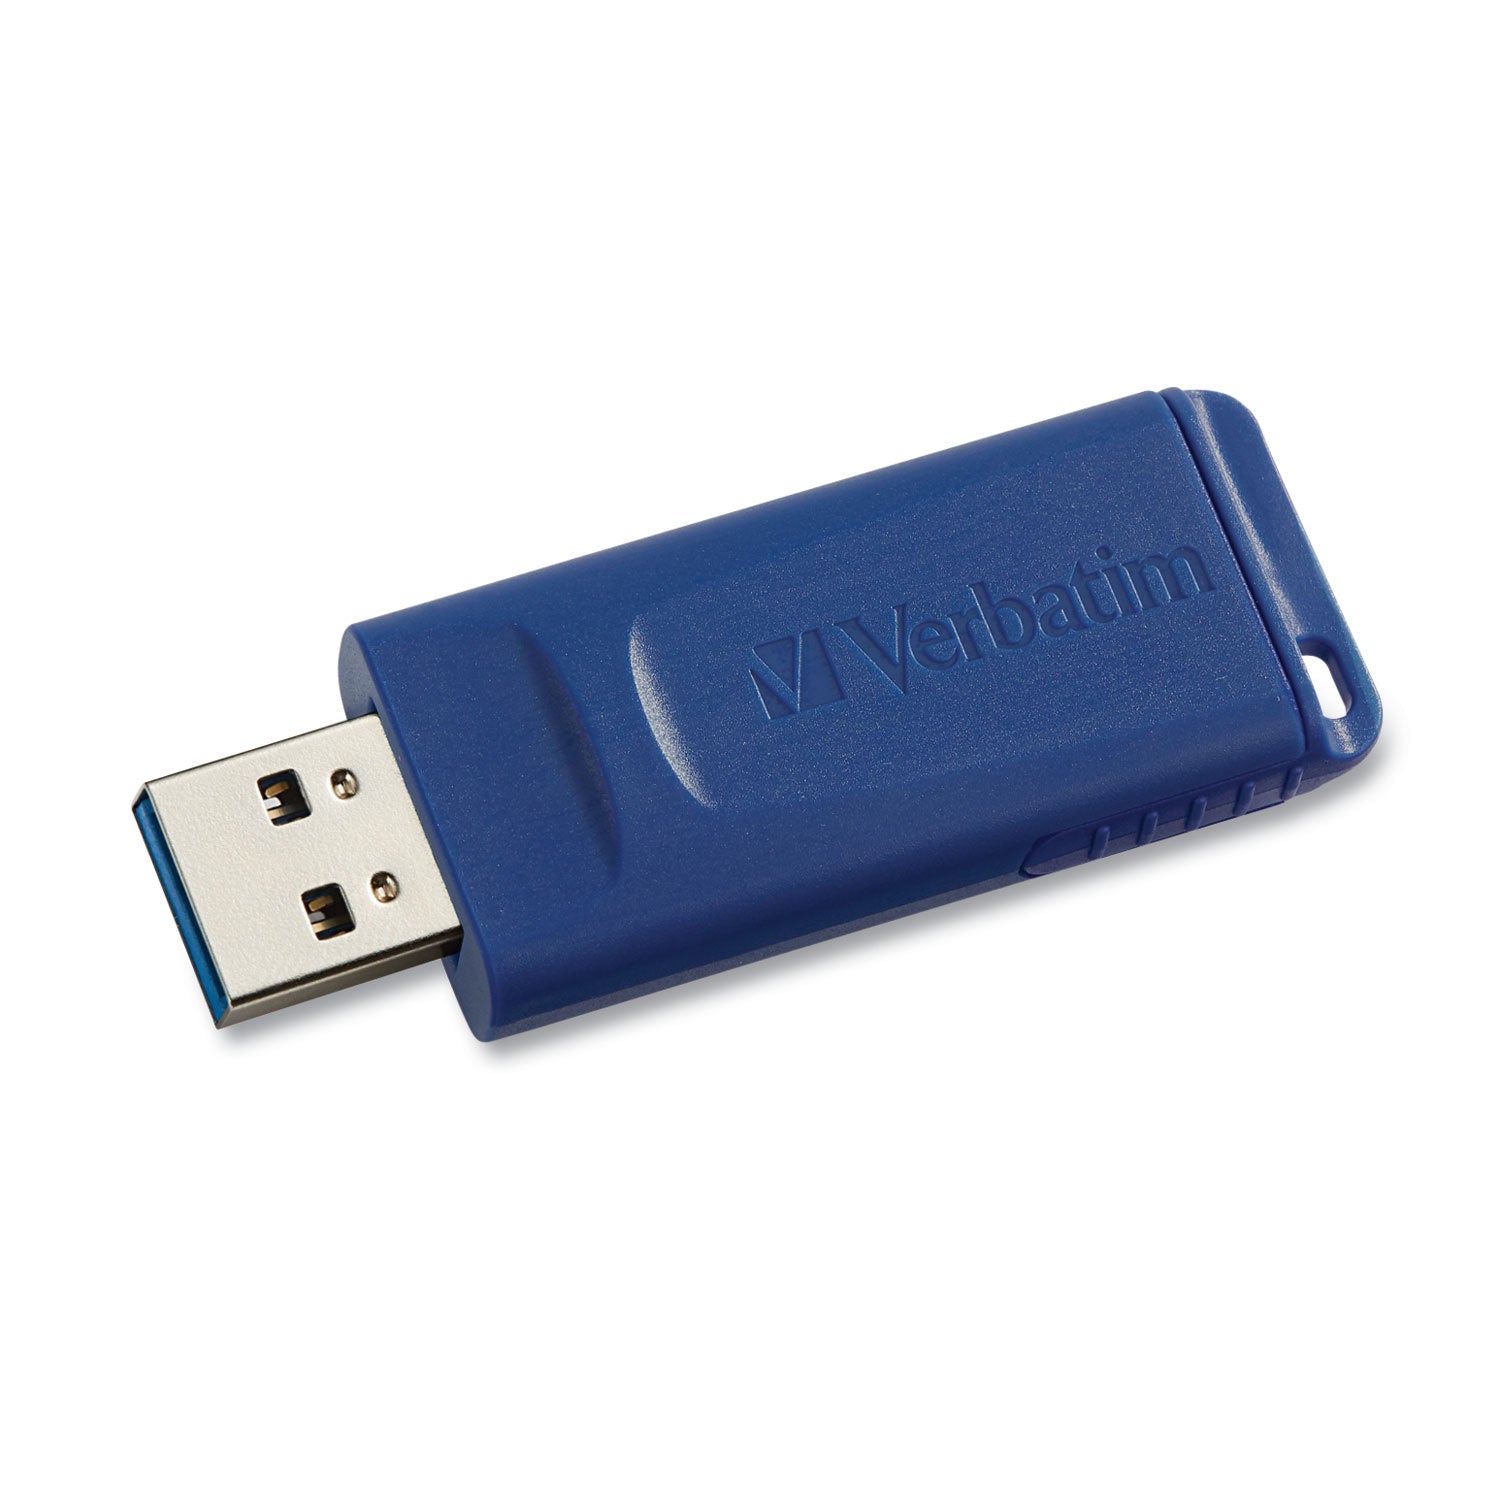 classic-usb-20-flash-drive-16-gb-blue-5-pack_ver99810 - 1